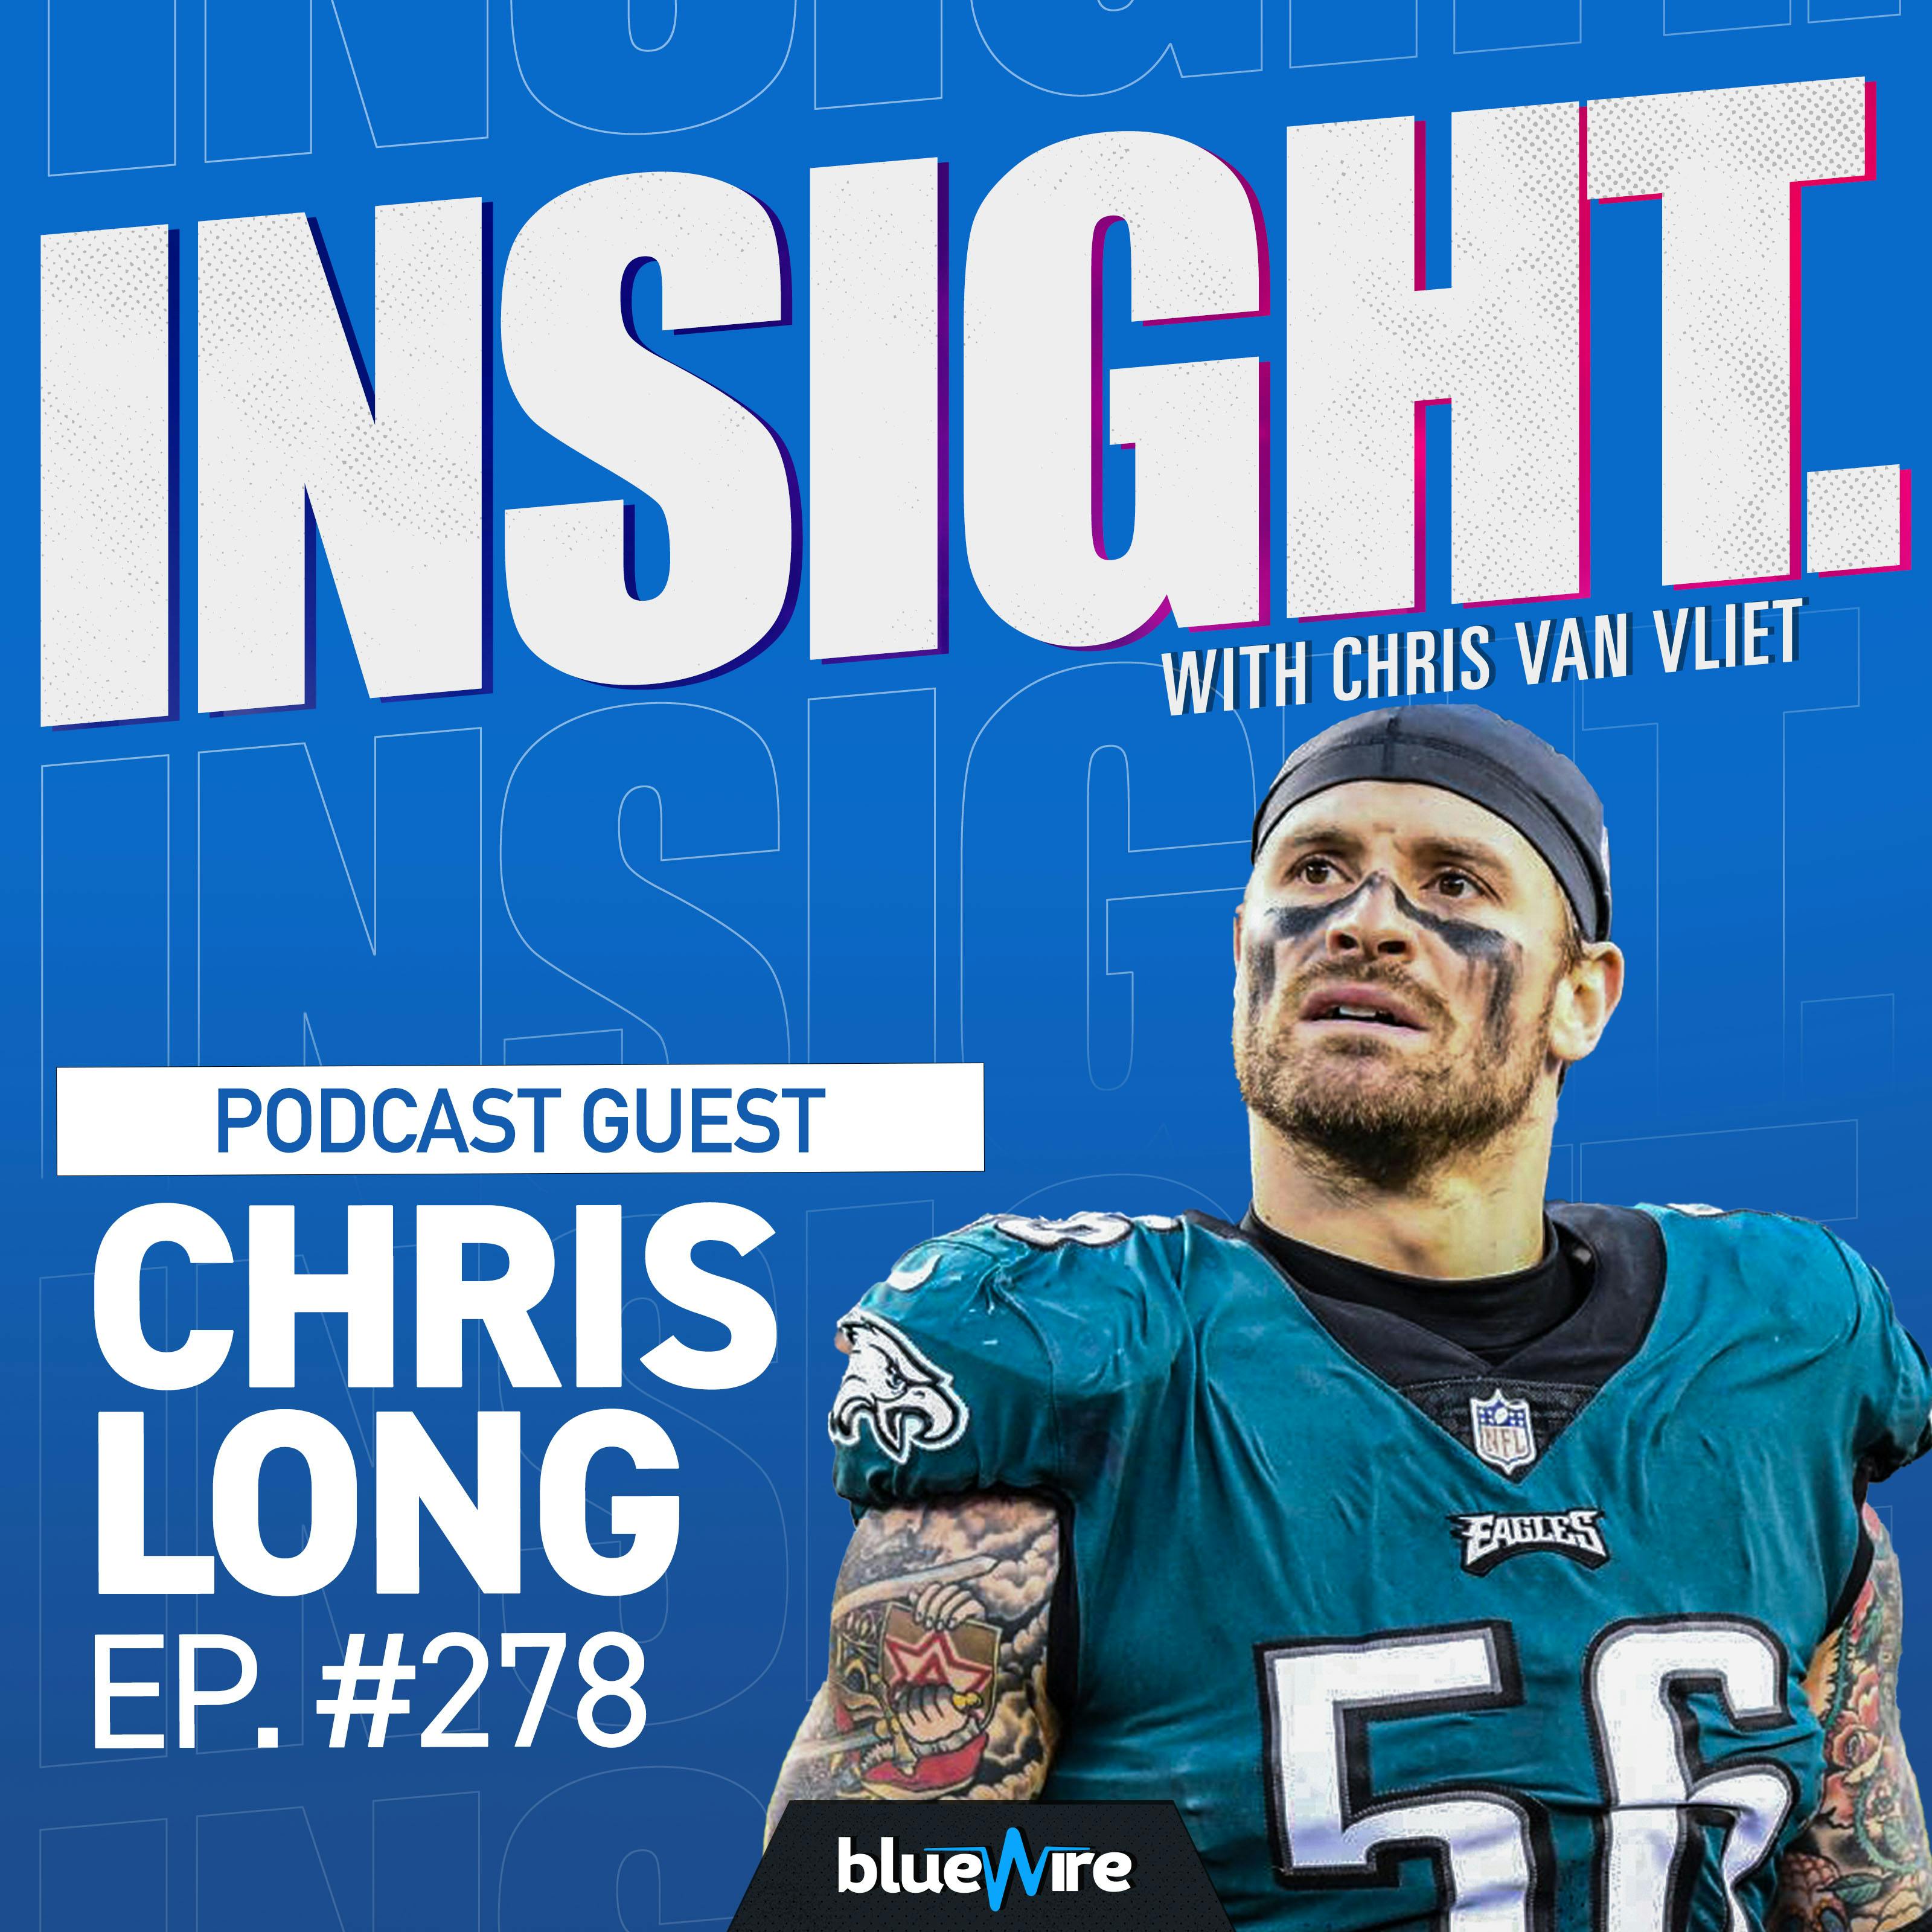 2-Time Super Bowl Champion Chris Long On Developing a Champion's Mindset